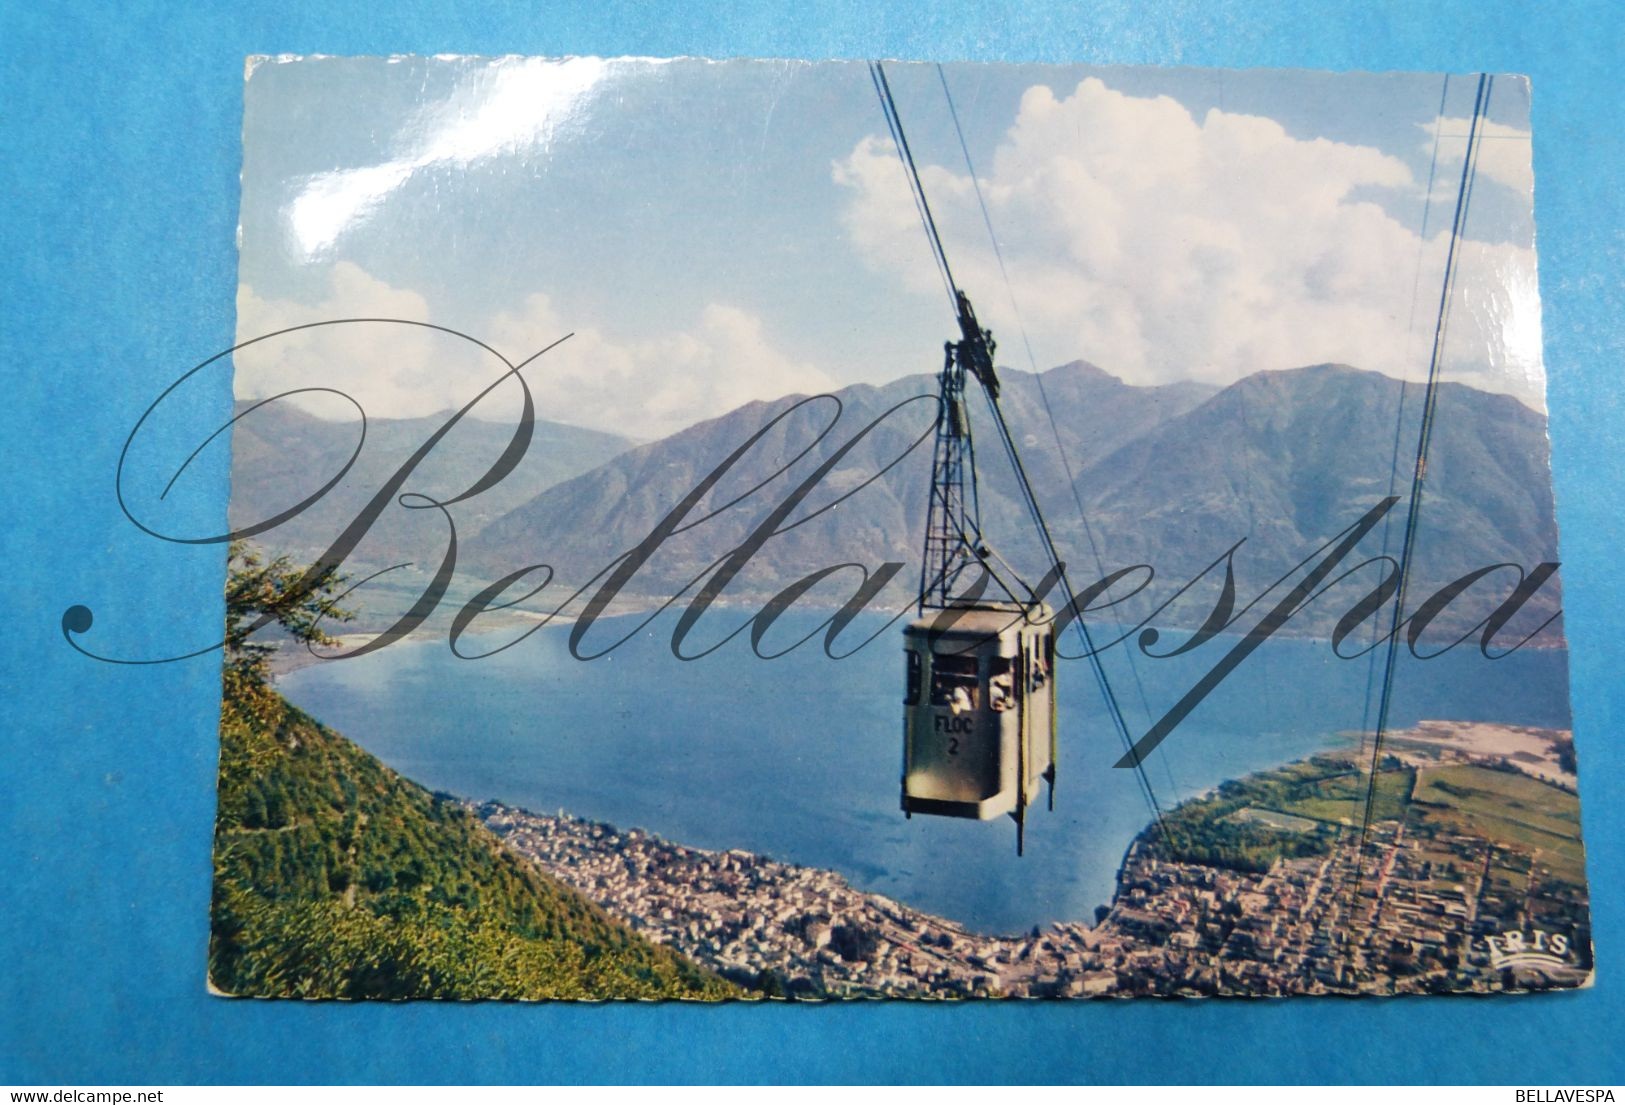 Alpine Montagne Skilift LOT x 13 cpsm Téléferique felskinnbahn cable-way, Schwebebahn Seilbahn